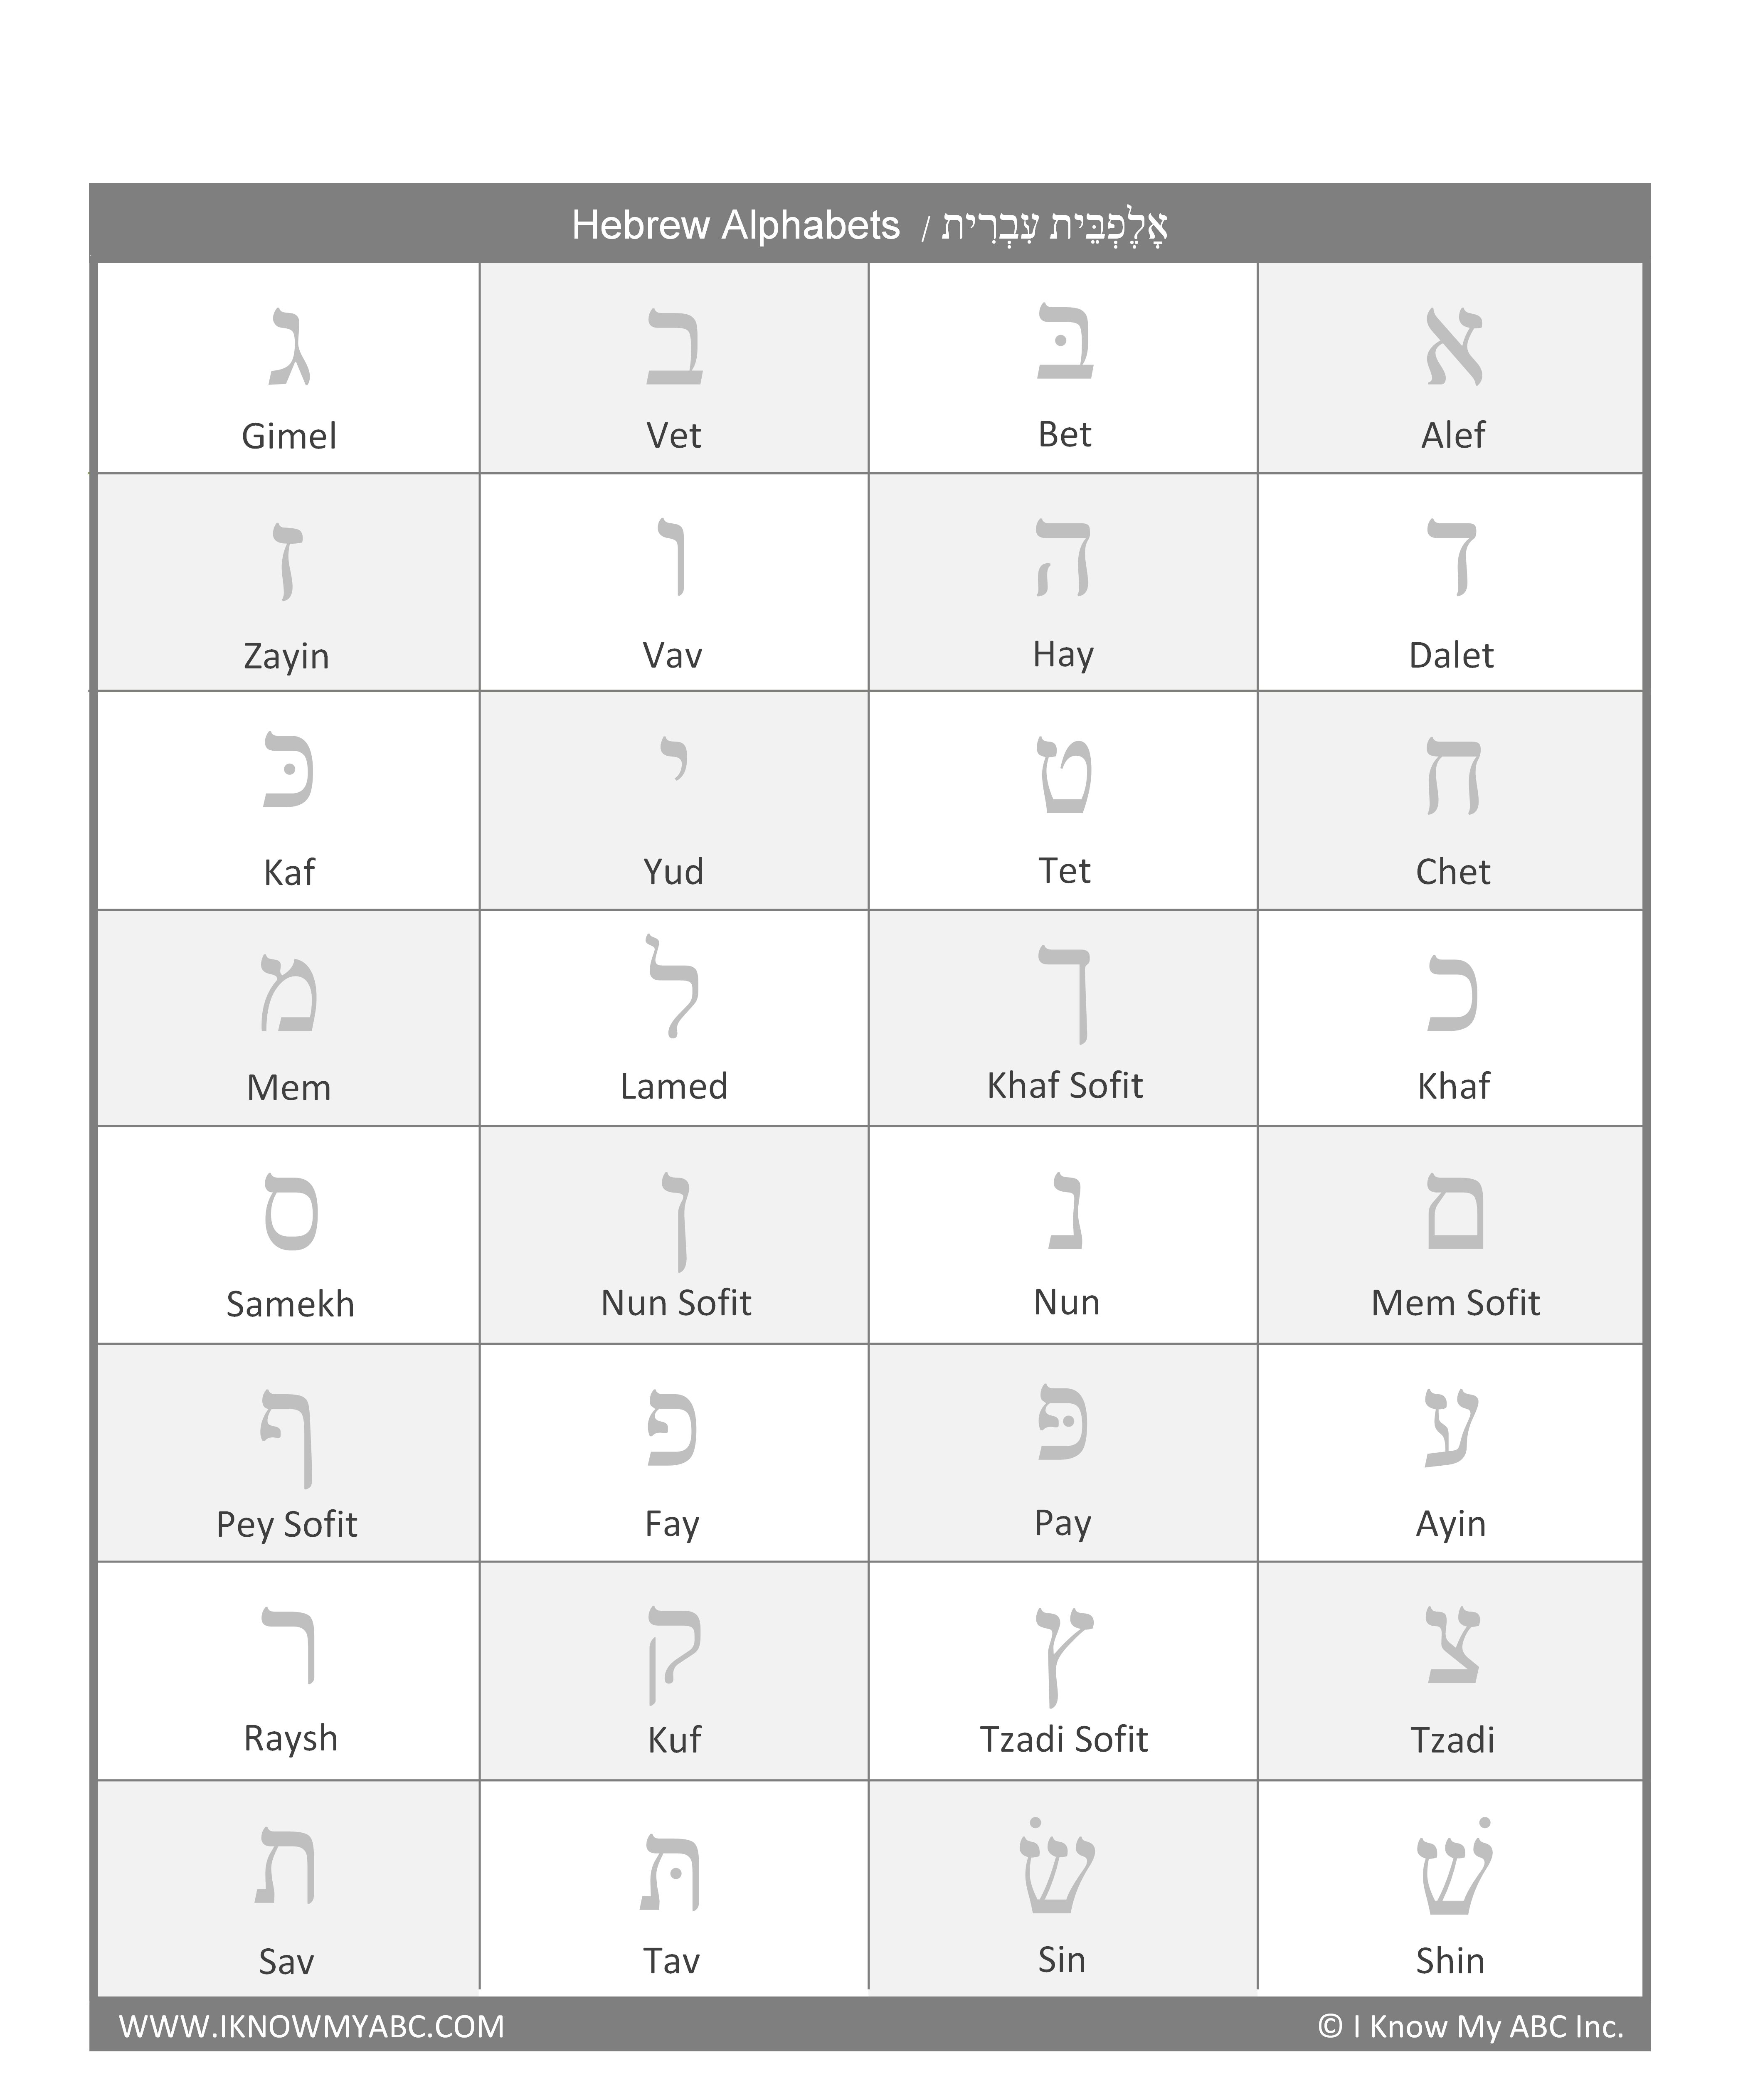 english spelling of hebrew alphabet